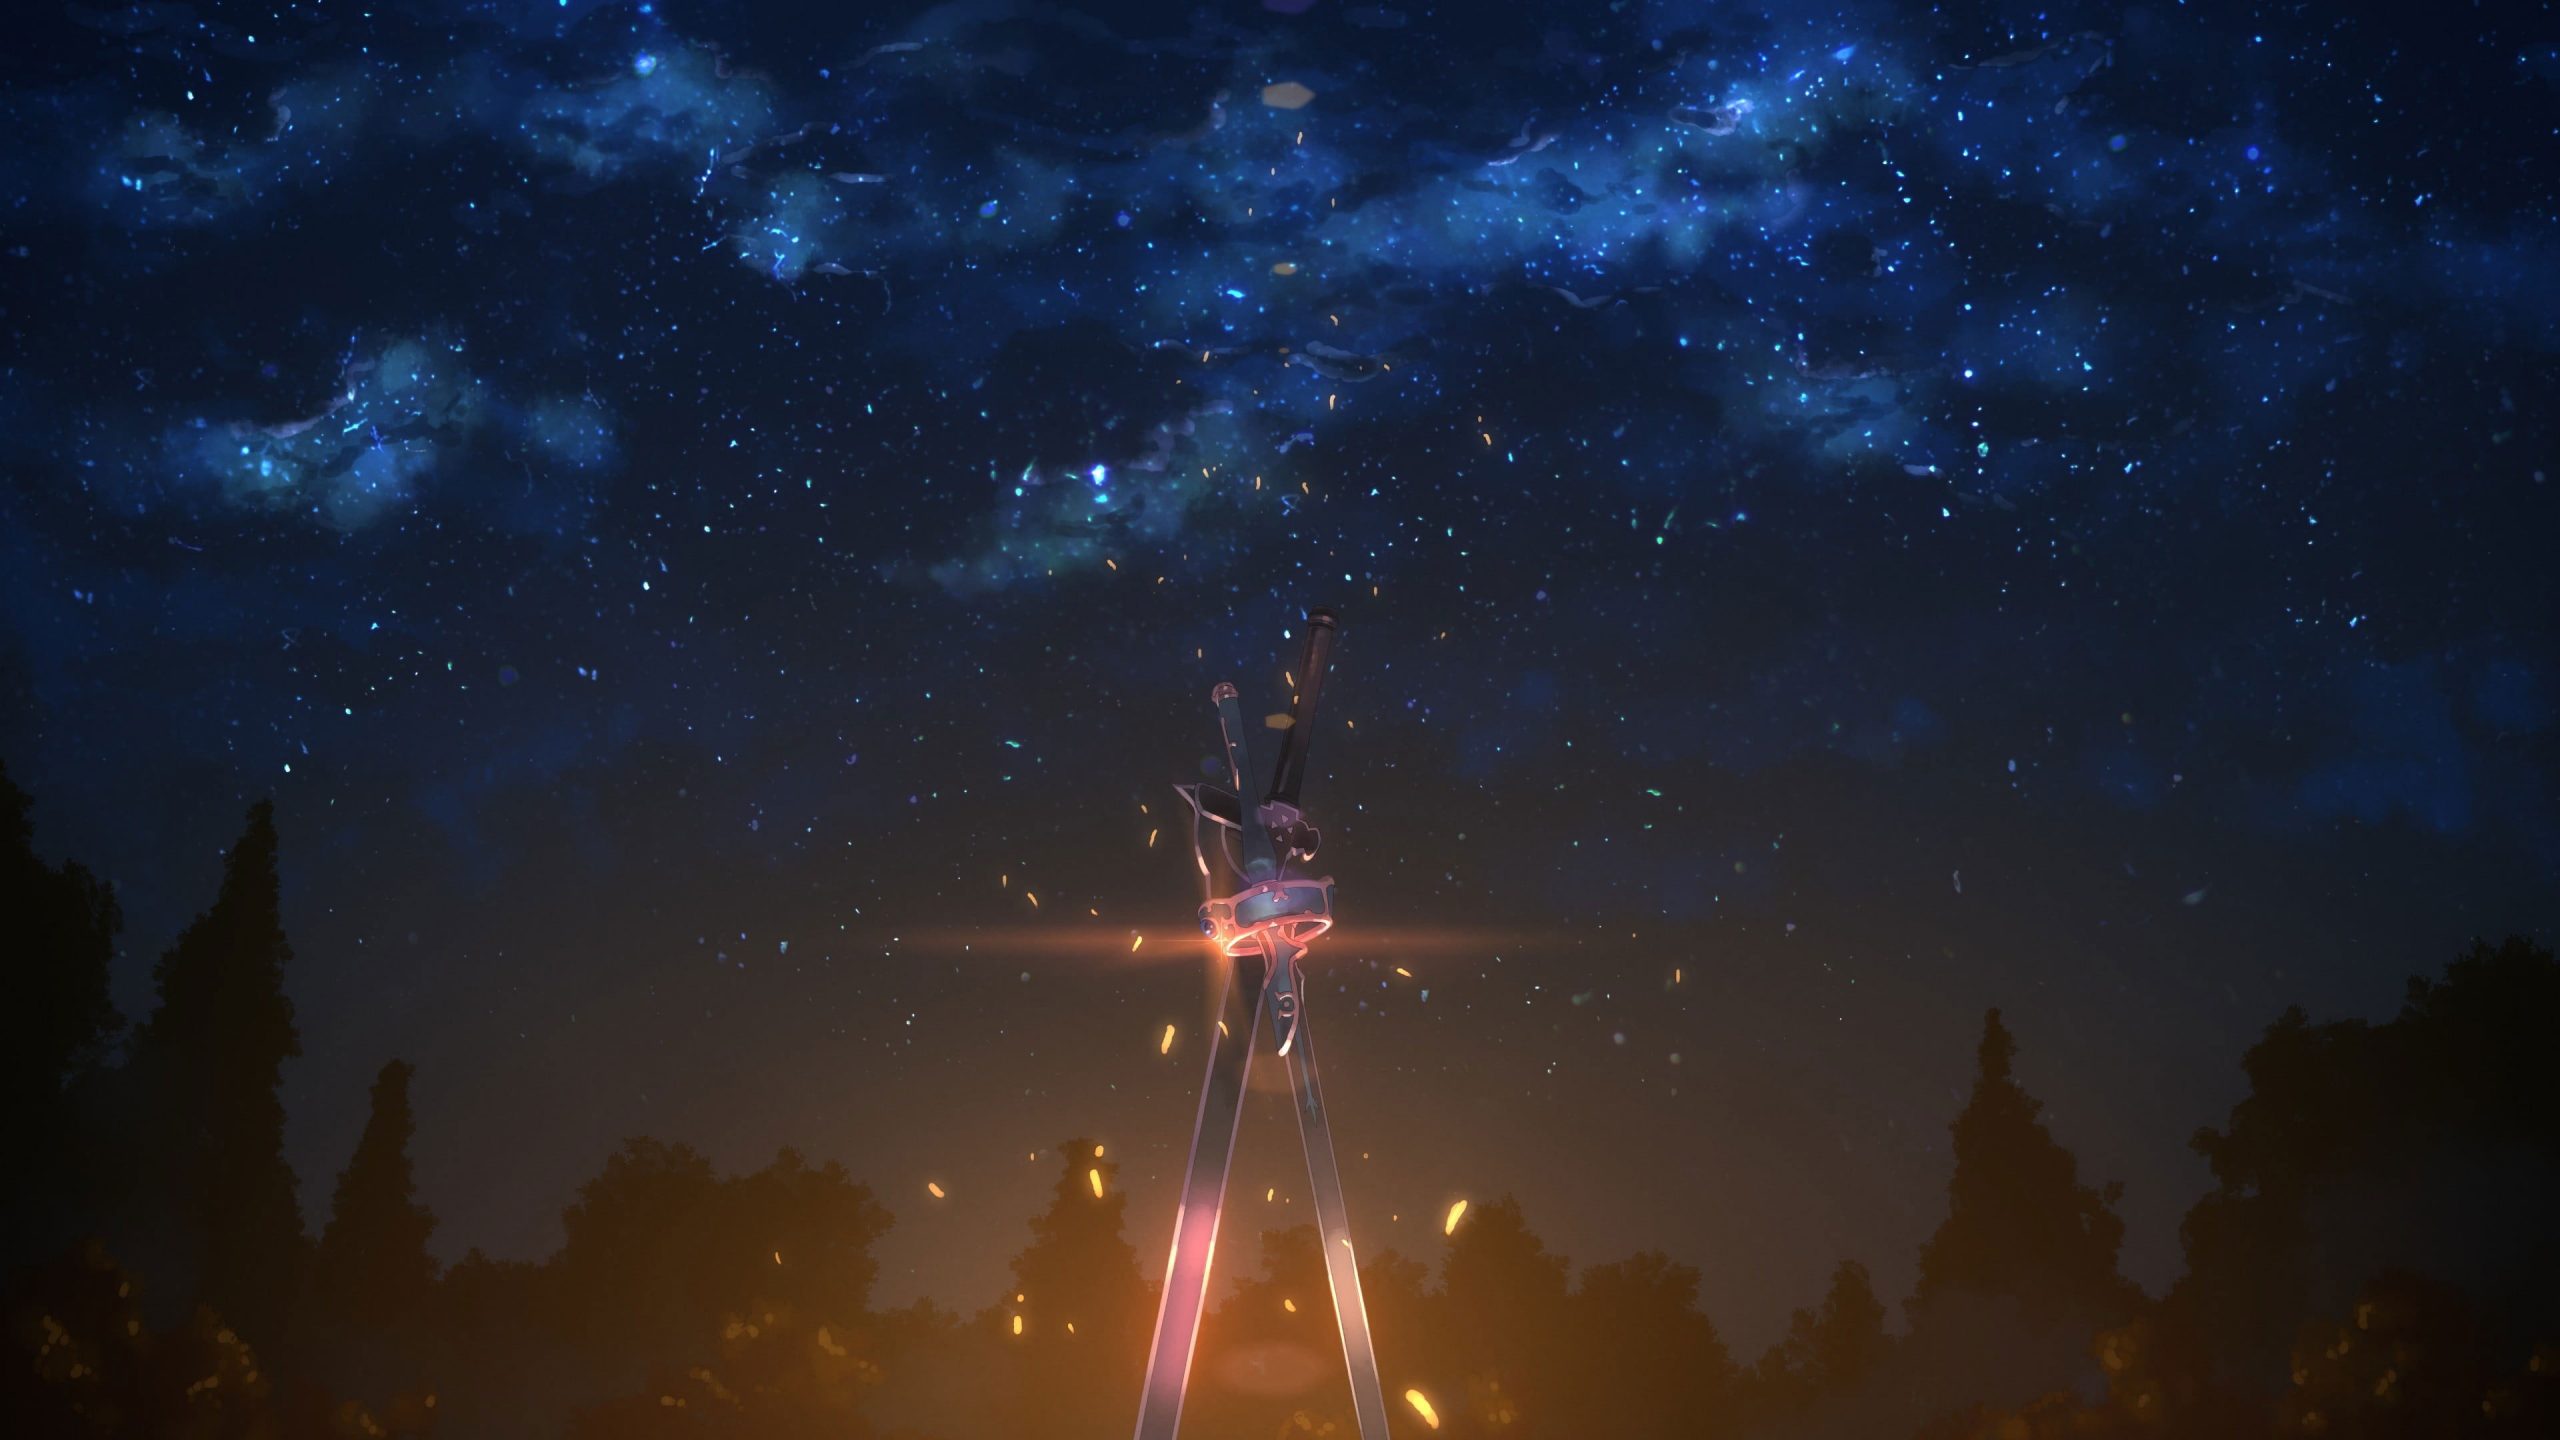 Nebula digital wallpaper, starry sky illustration, Sword Art Online